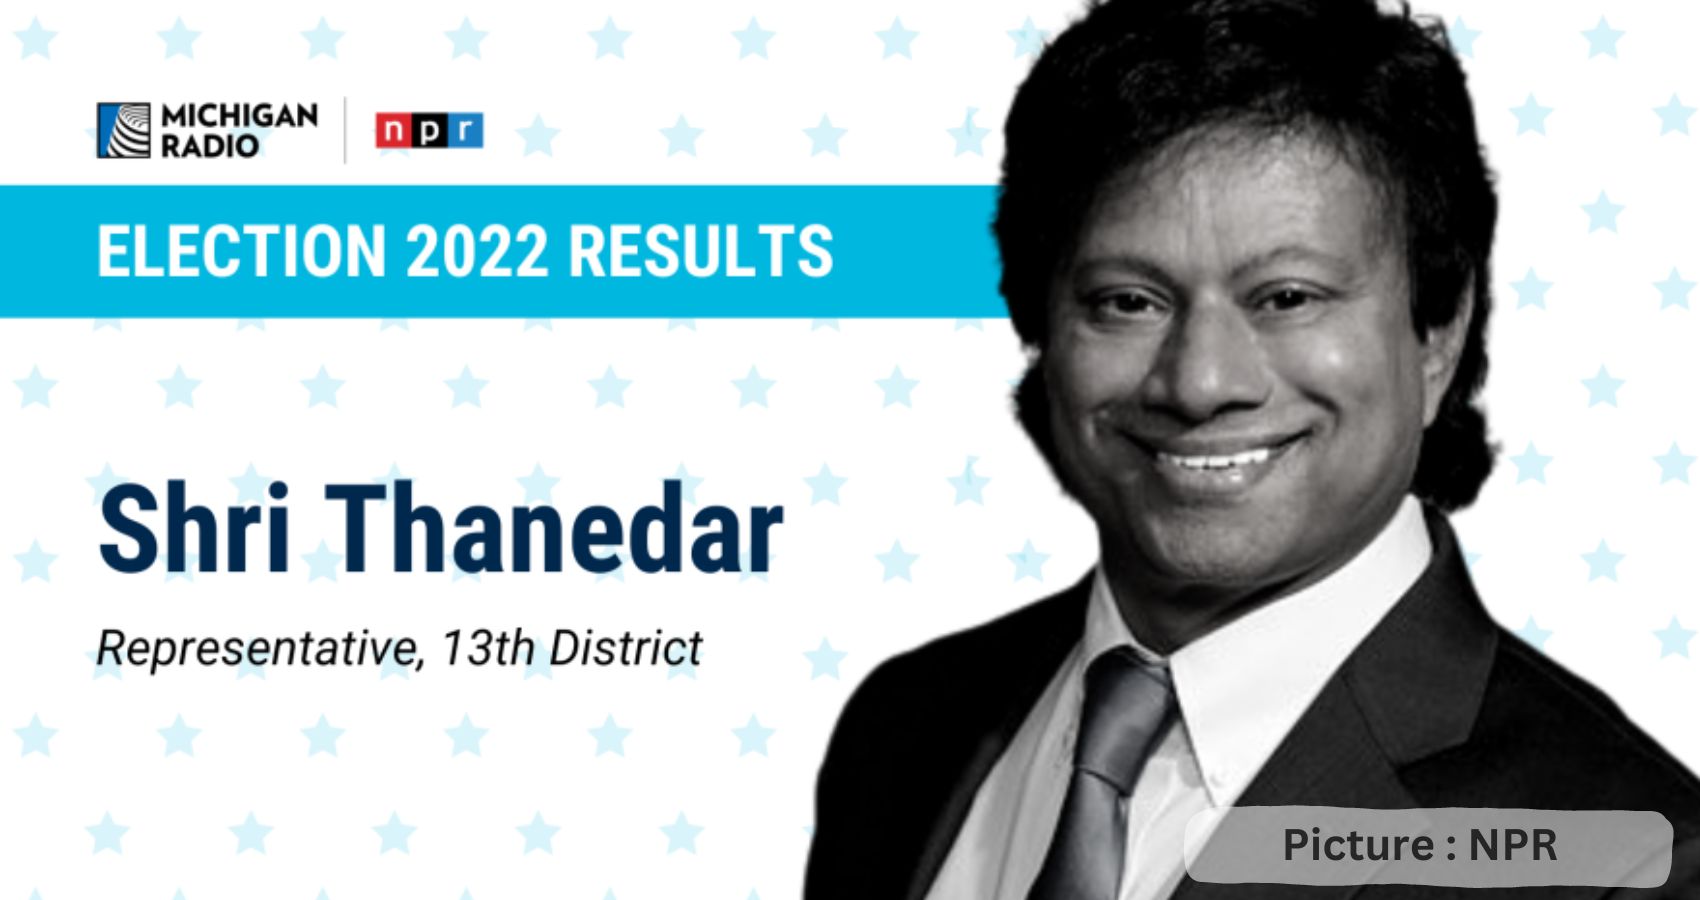 Shri Thanedar Elected To Michigan’s U.S. House District 13